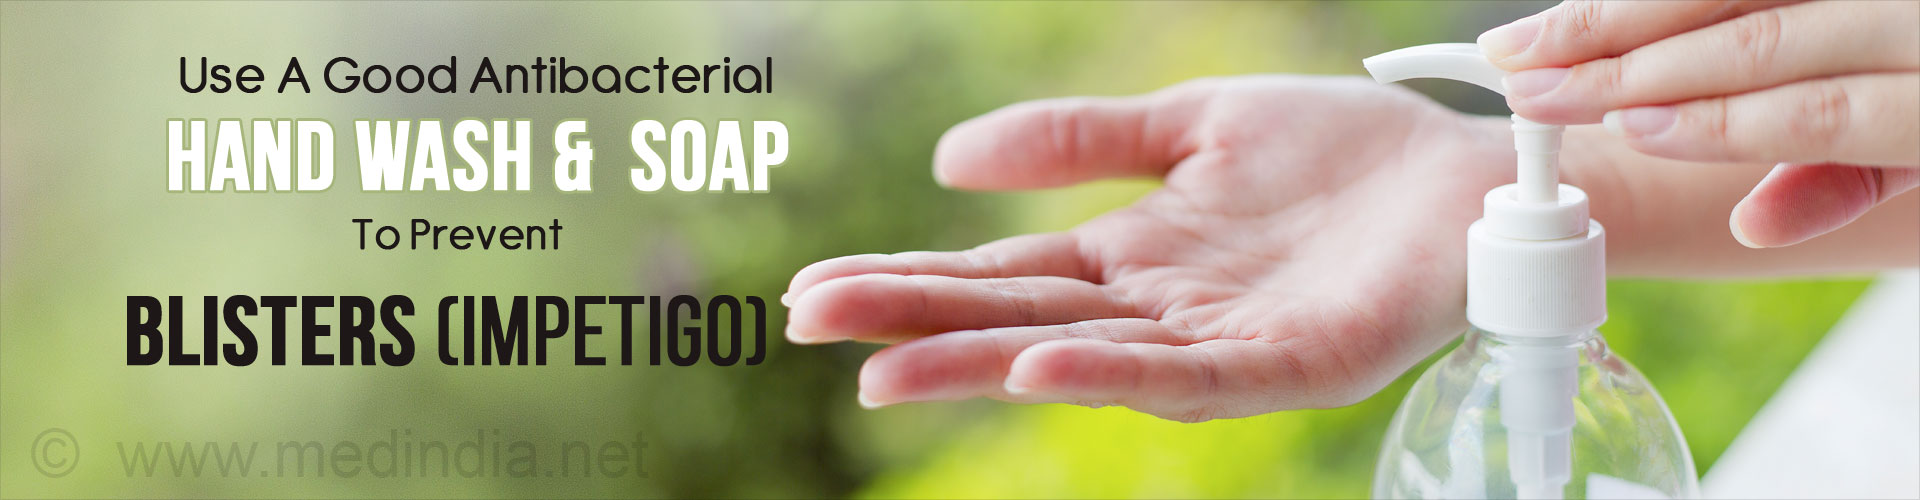 Use good antibacterial hand wash and soap to prevent impetigo